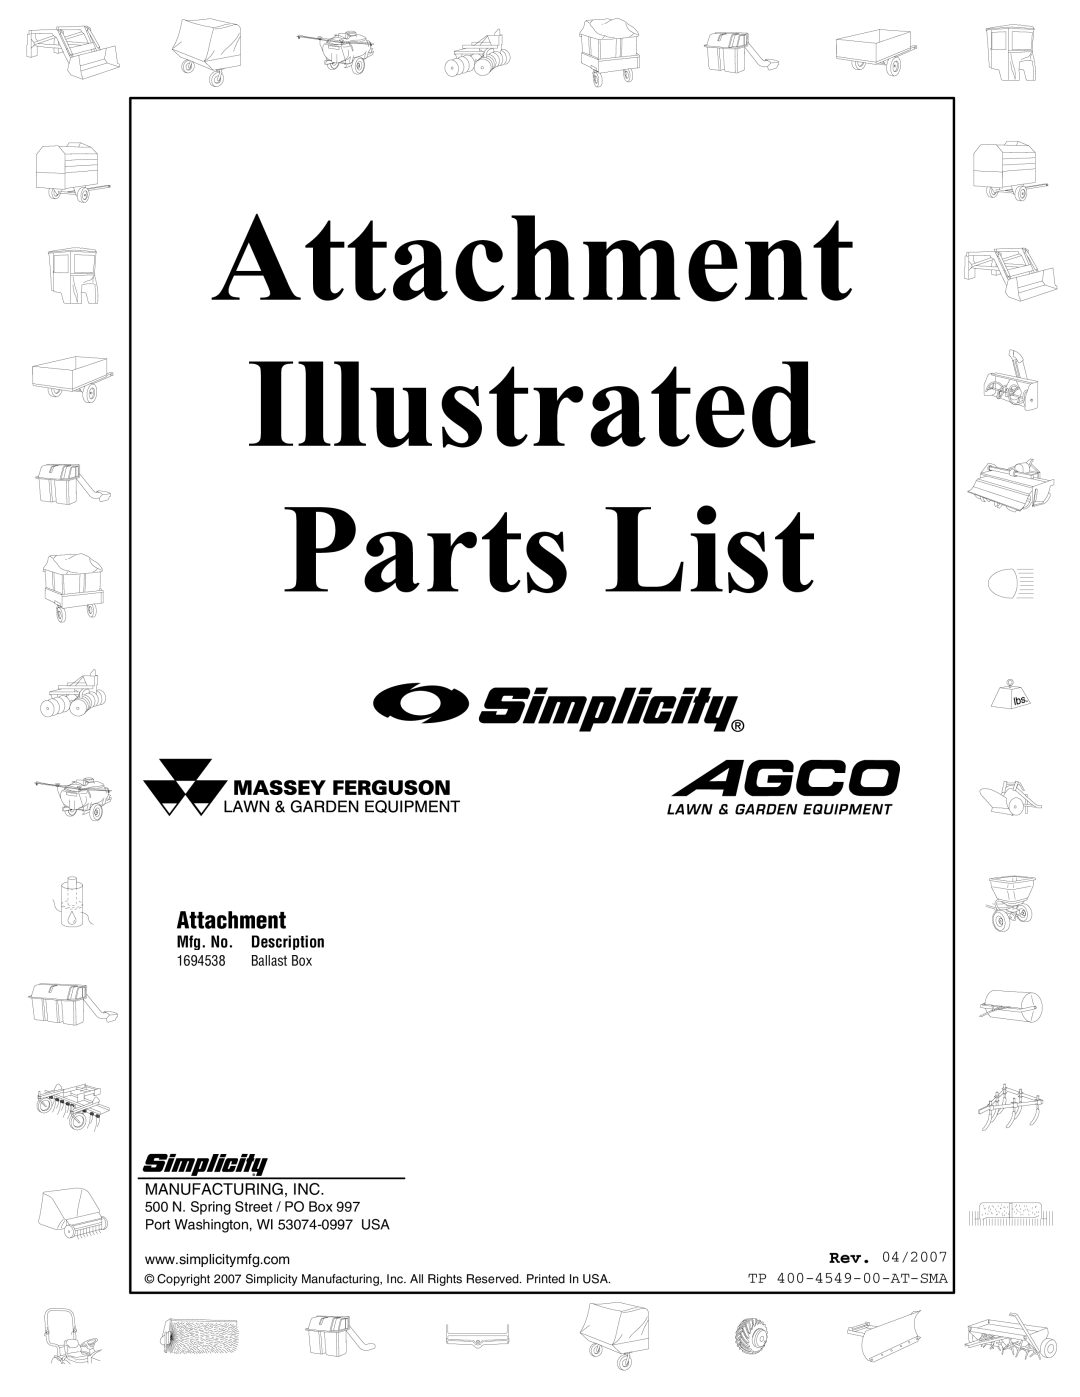 Simplicity 1694538 manual Attachment, Mfg. No, Description, Rev. 04/2007, TP 400-4549-00-AT-SMA, Illustrated, Parts List 